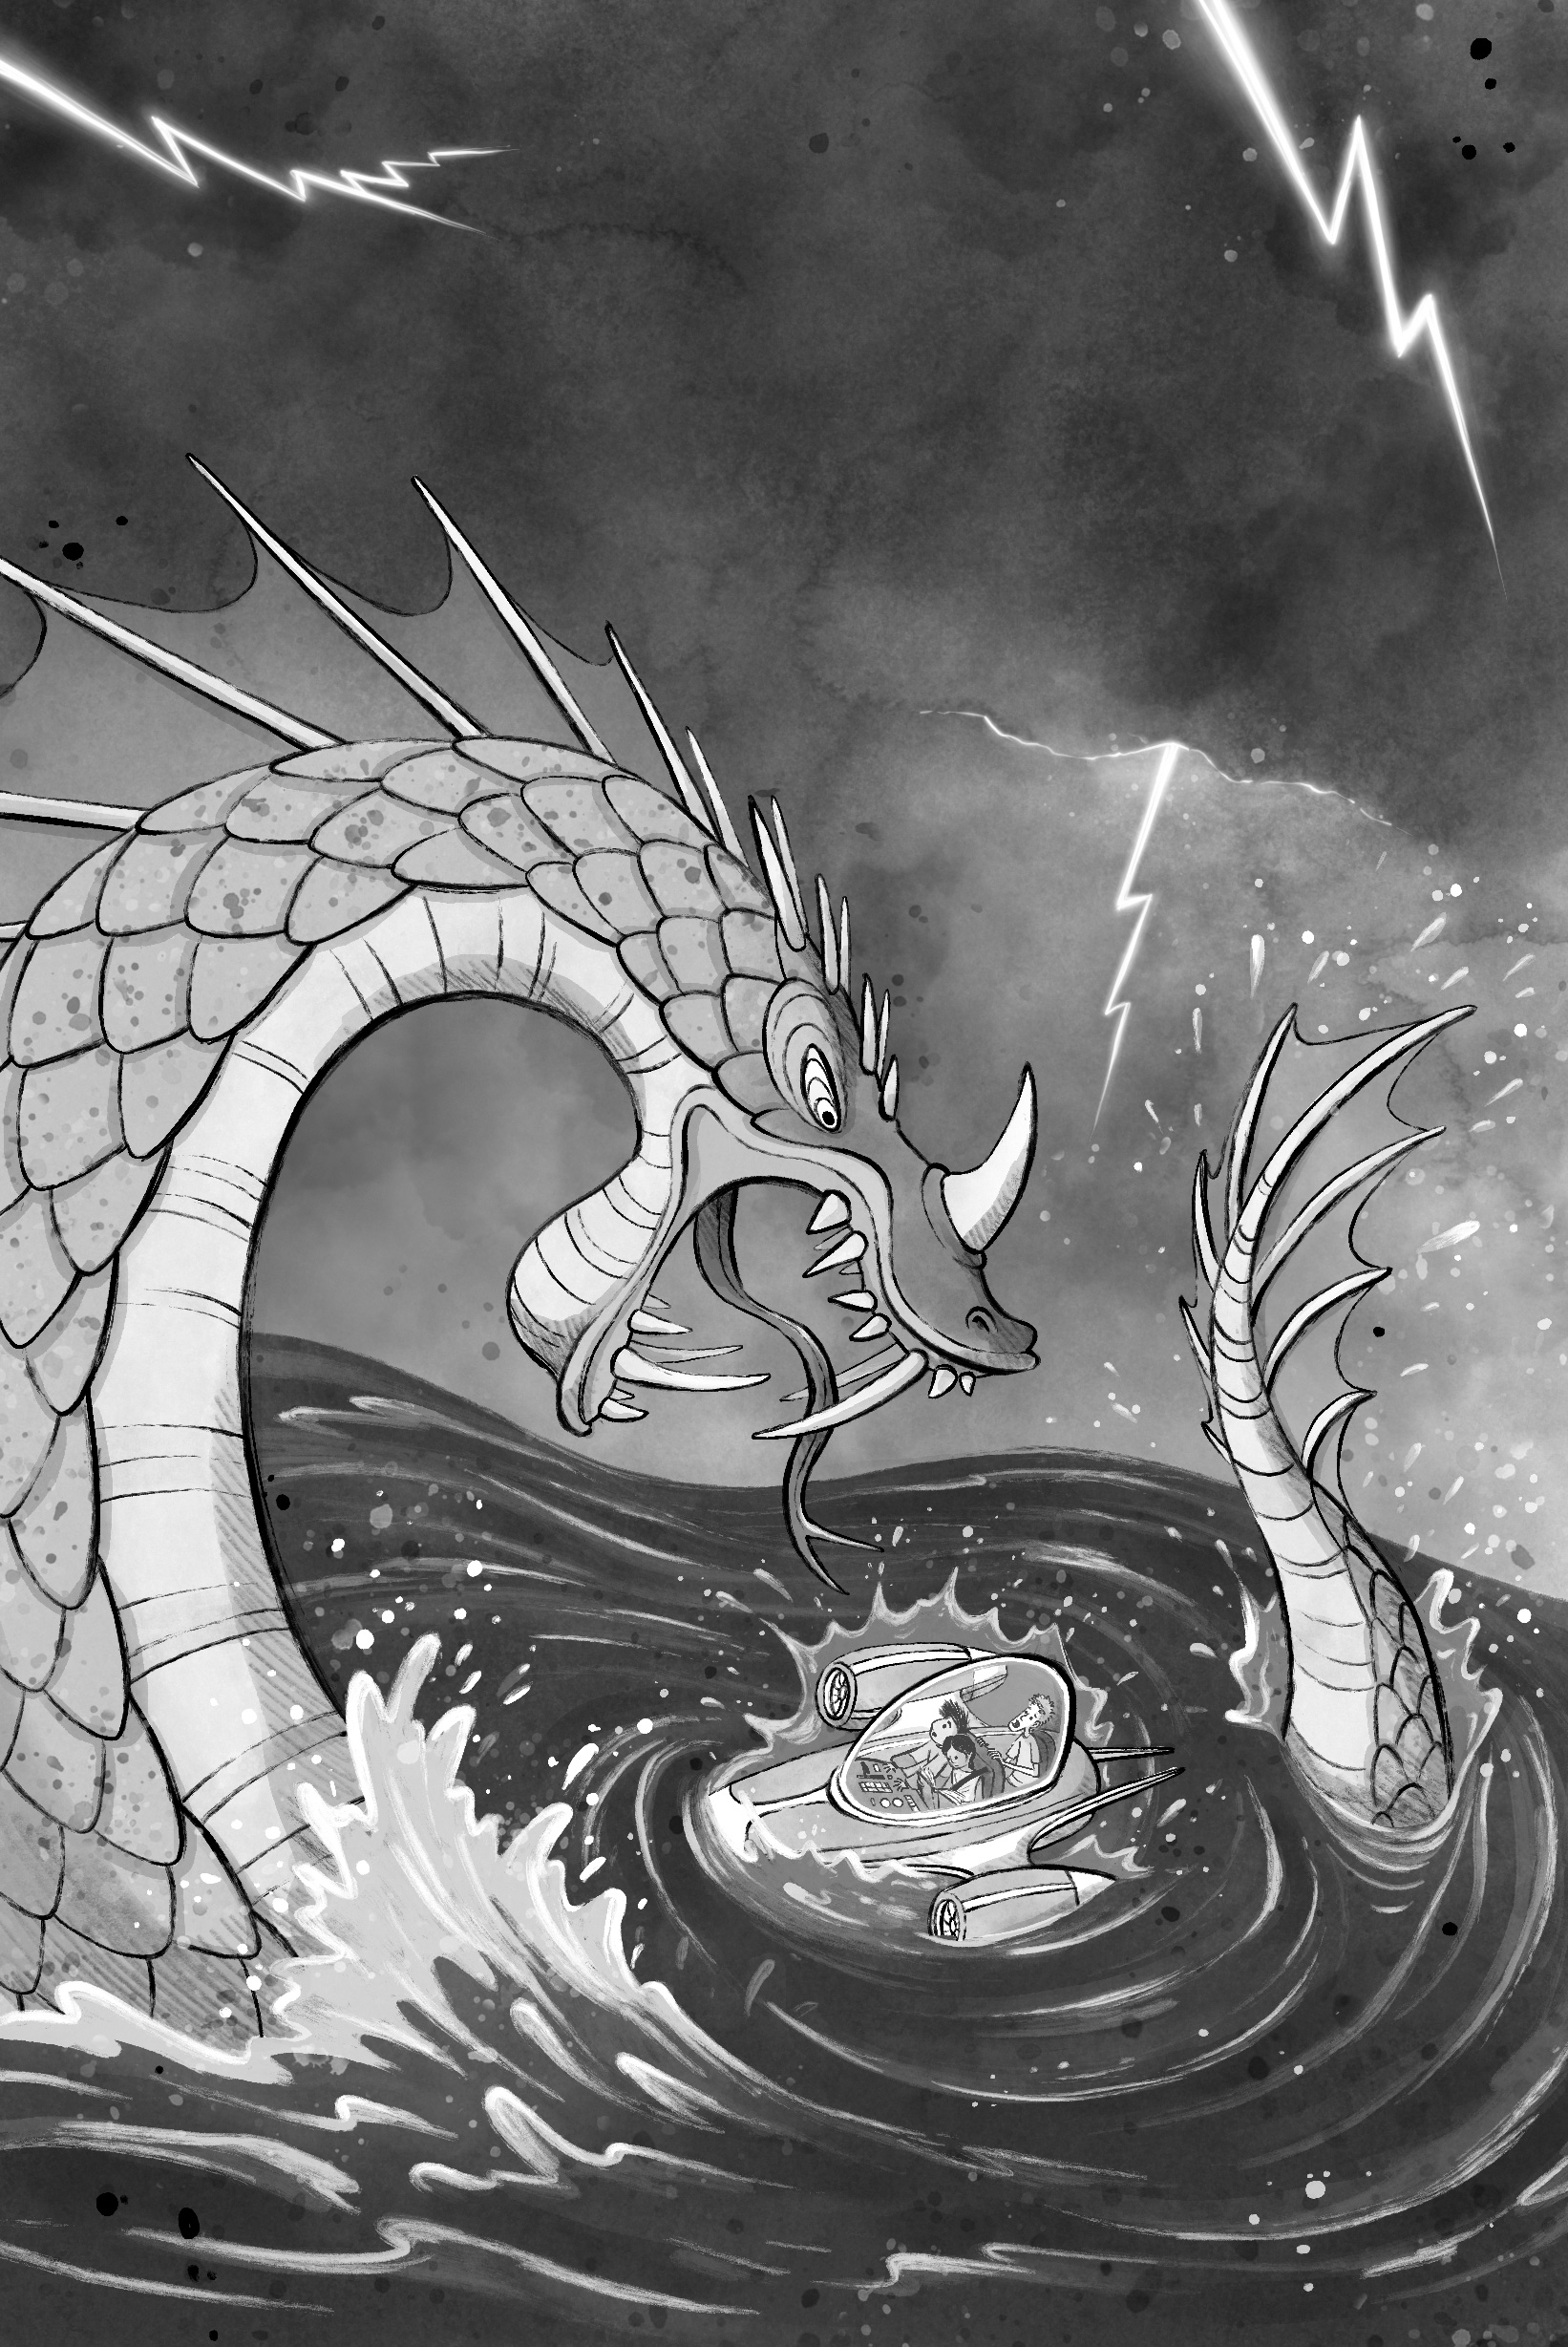 Illustration of snake monster attacking rocket ship in water